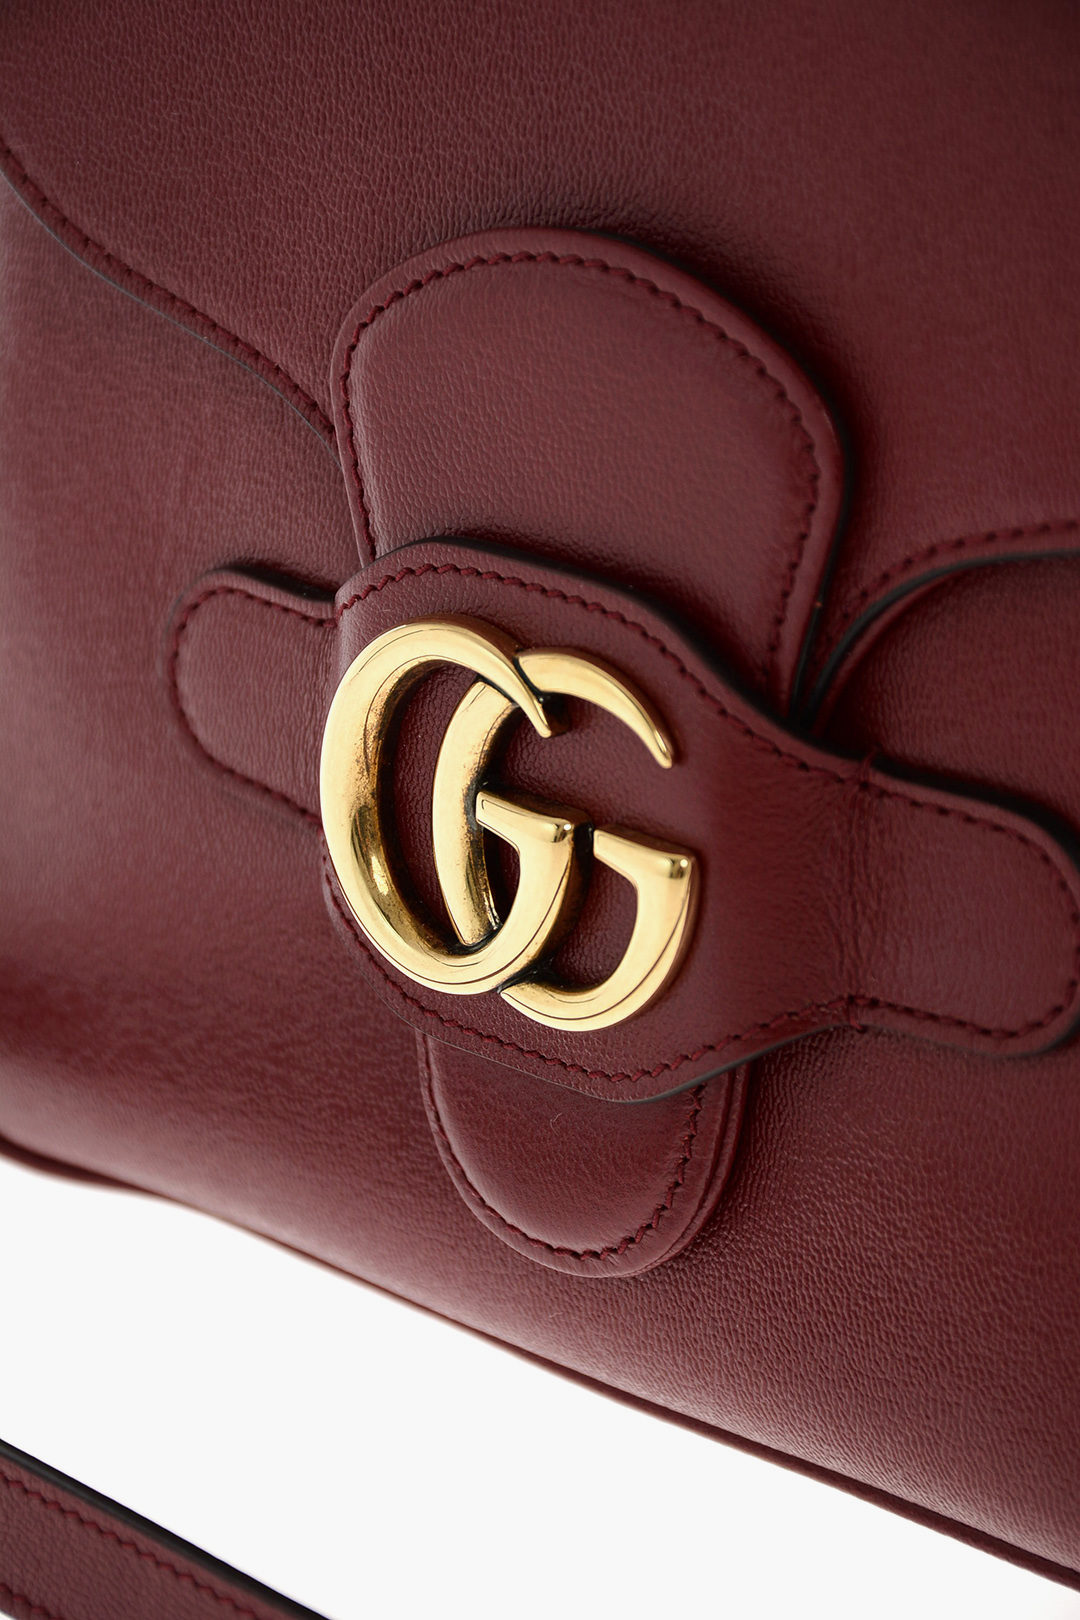 Gucci Leather DAHLIA Saddle Bag women - Glamood Outlet